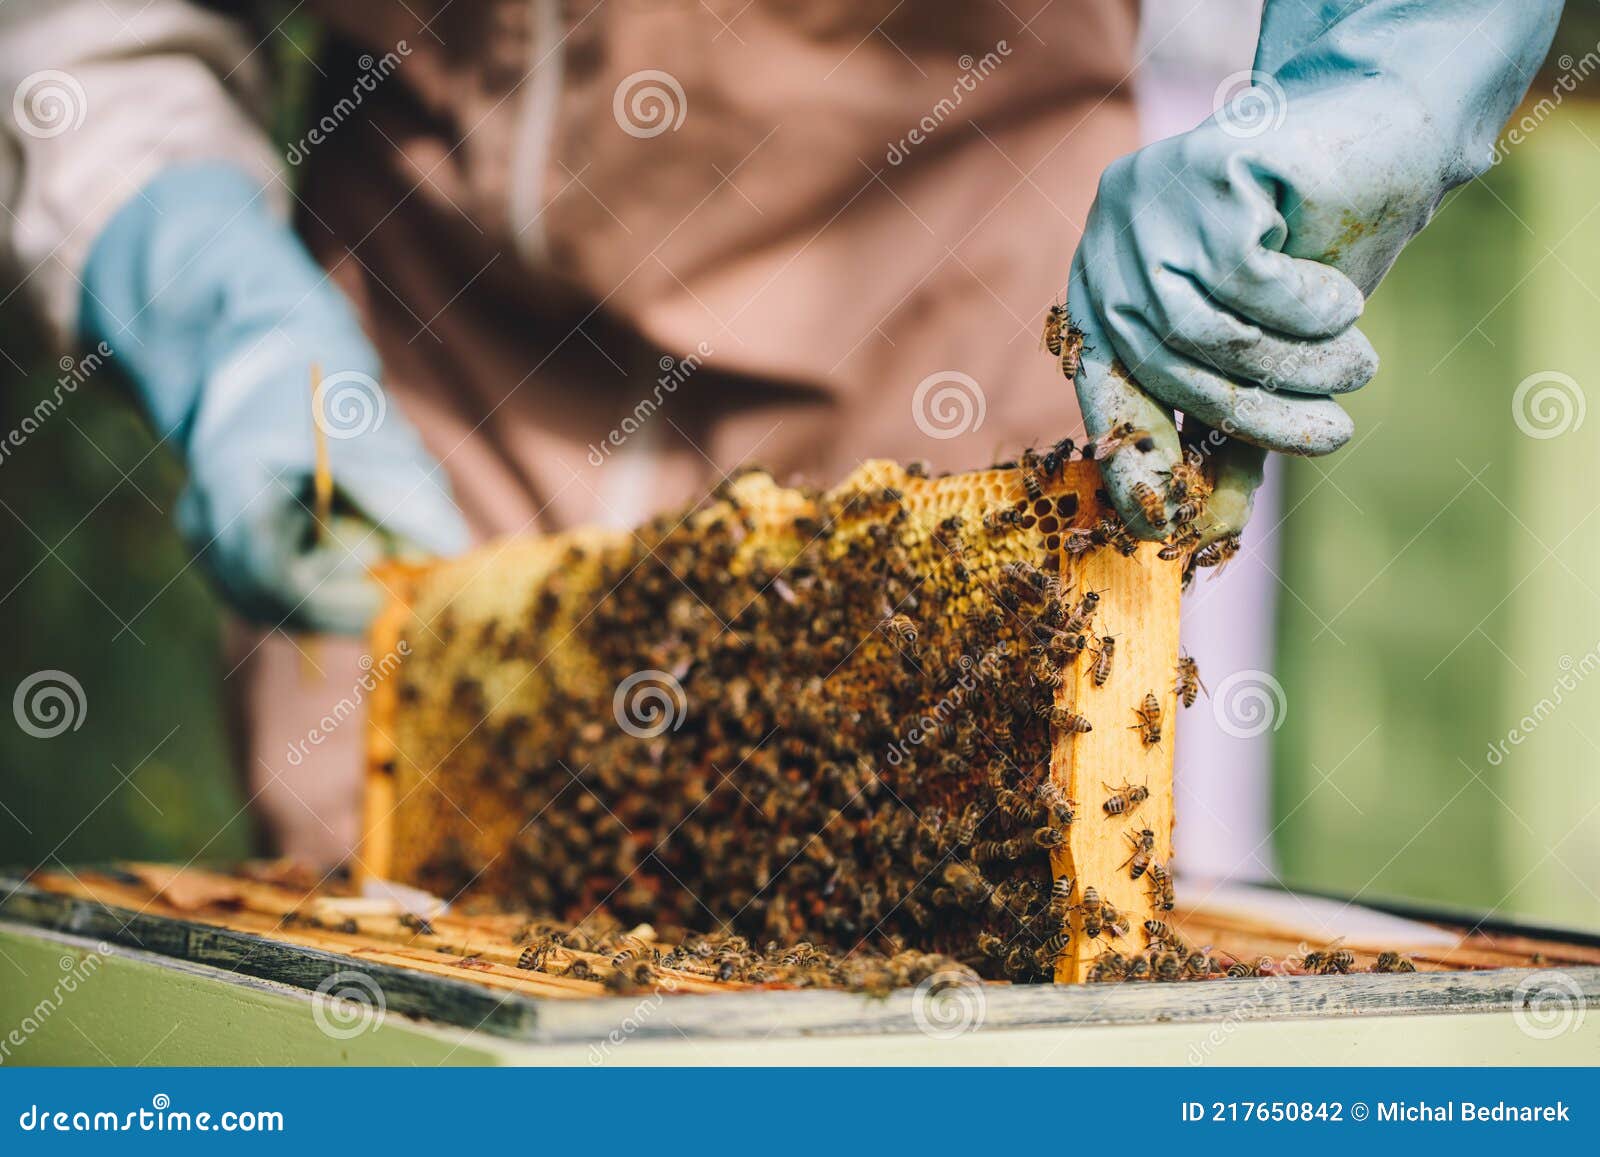 beekeeper at work. honey bees on honeycomb